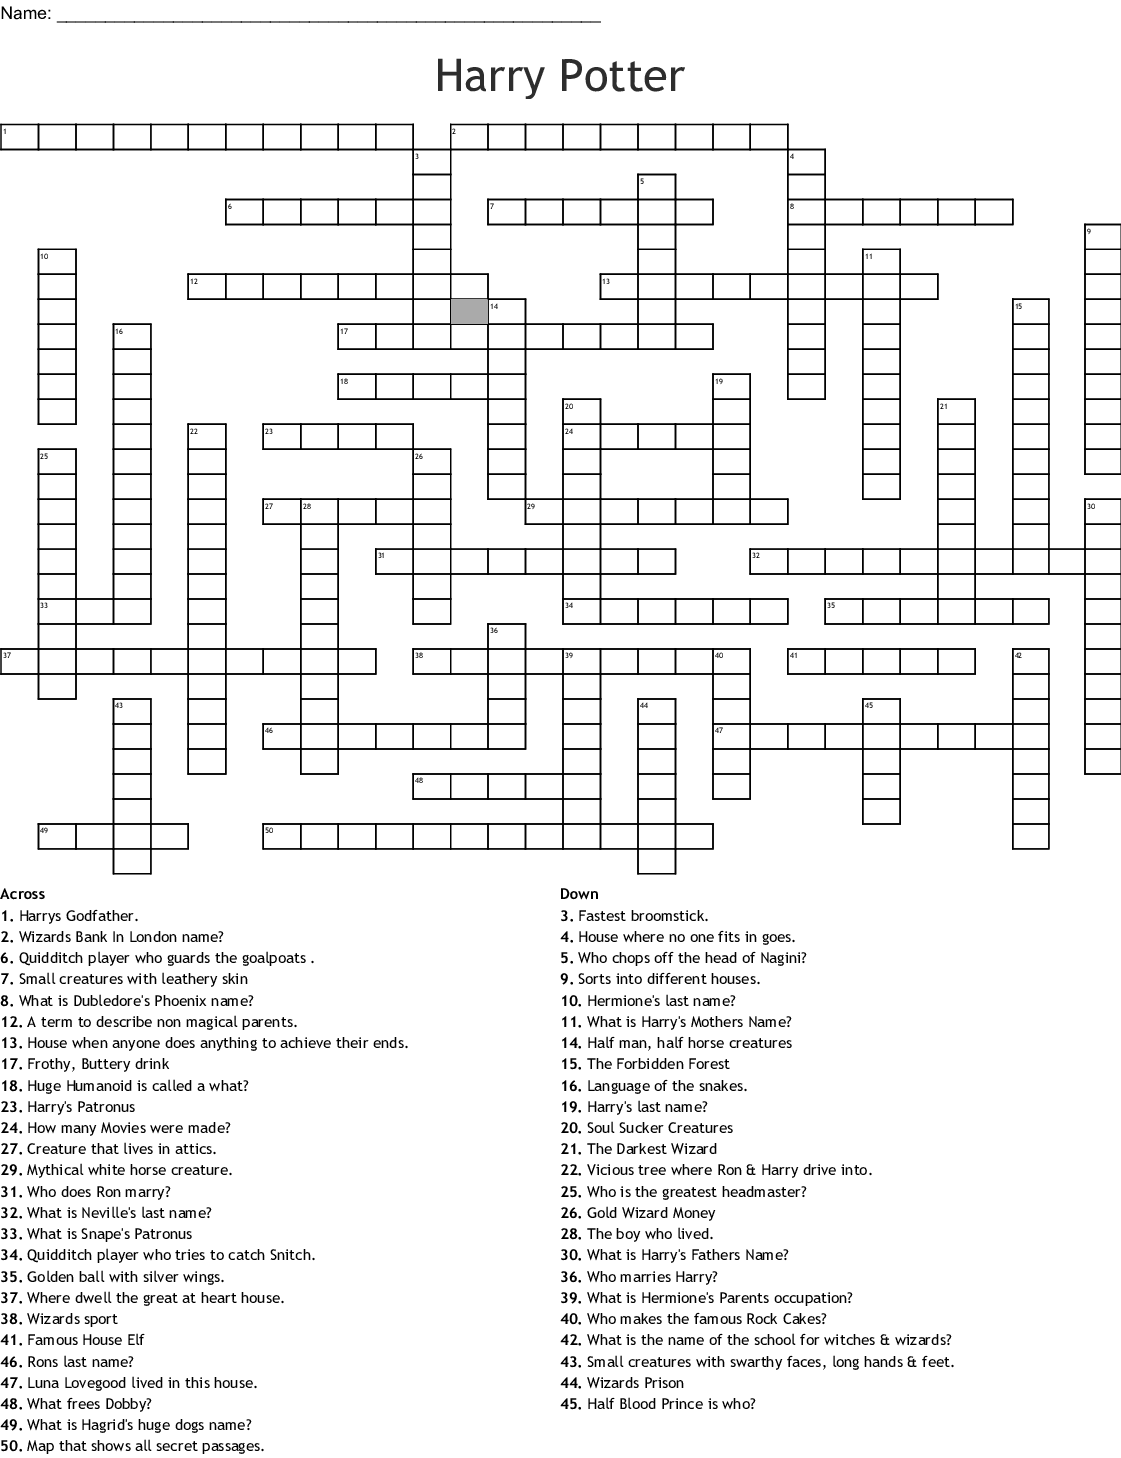 Harry Potter Crossword Puzzle Printable